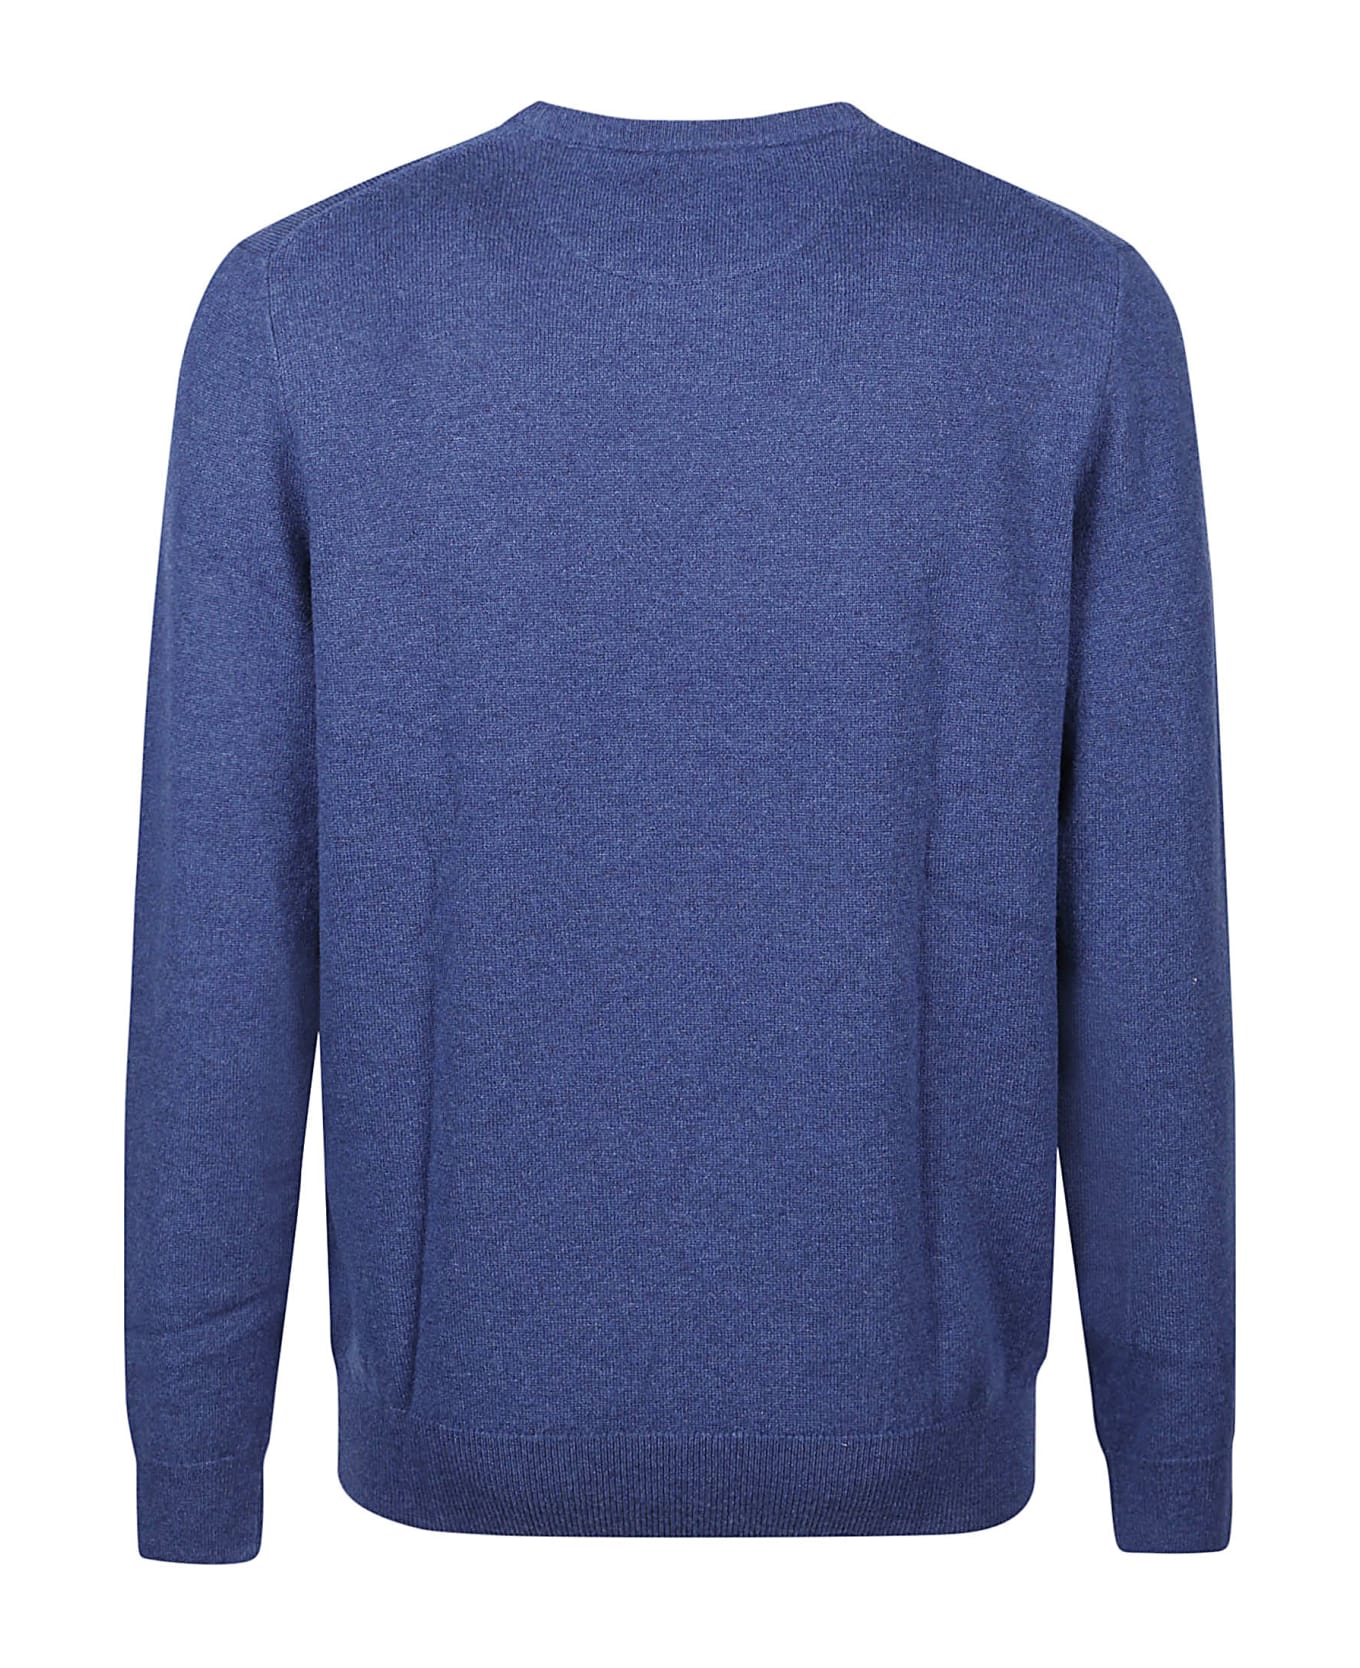 Polo Ralph Lauren Long Sleeve Sweater - Rustic Navy